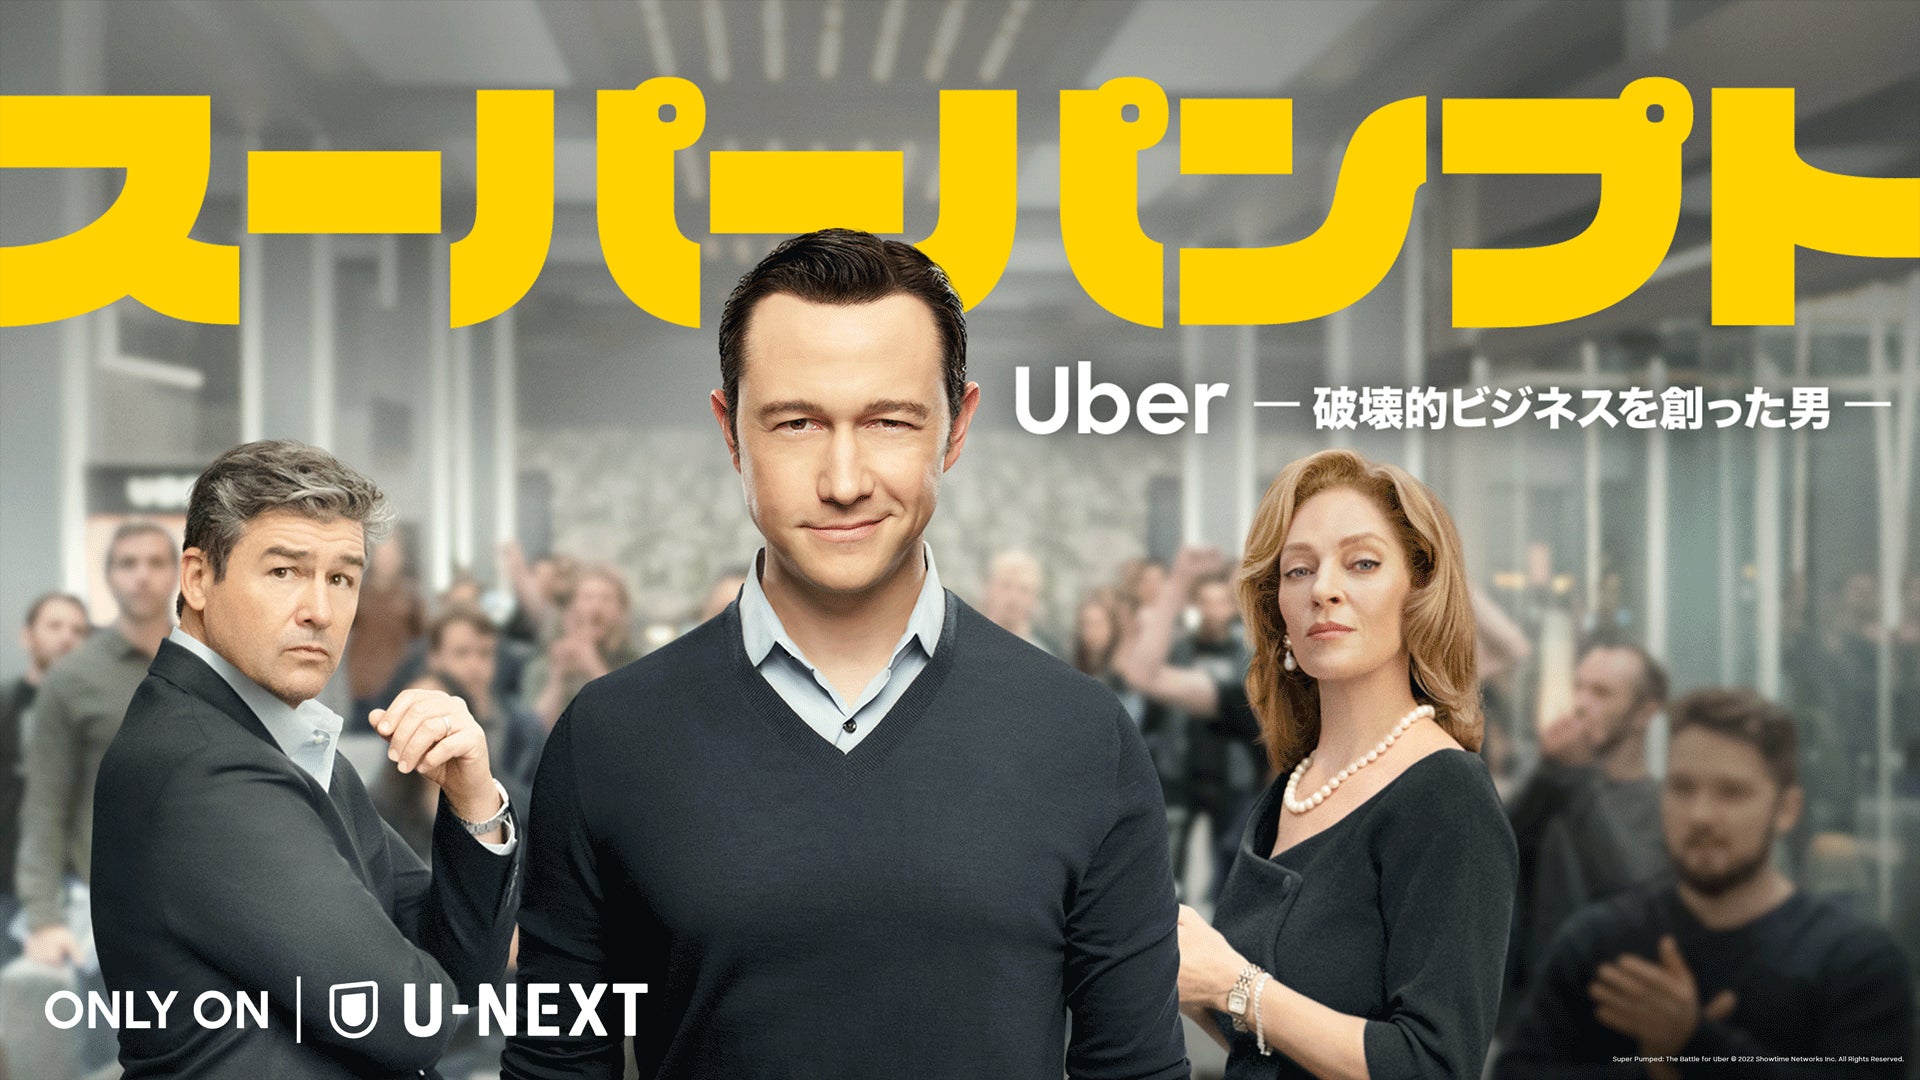 「Uber」元CEOトラビス・カラニックの成功と没落を描いた実話ベースのドラマ『スーパーパンプト / Uber -破壊的ビジネスを創った男-』を11月11日(金)U-NEXTにて独占配信！